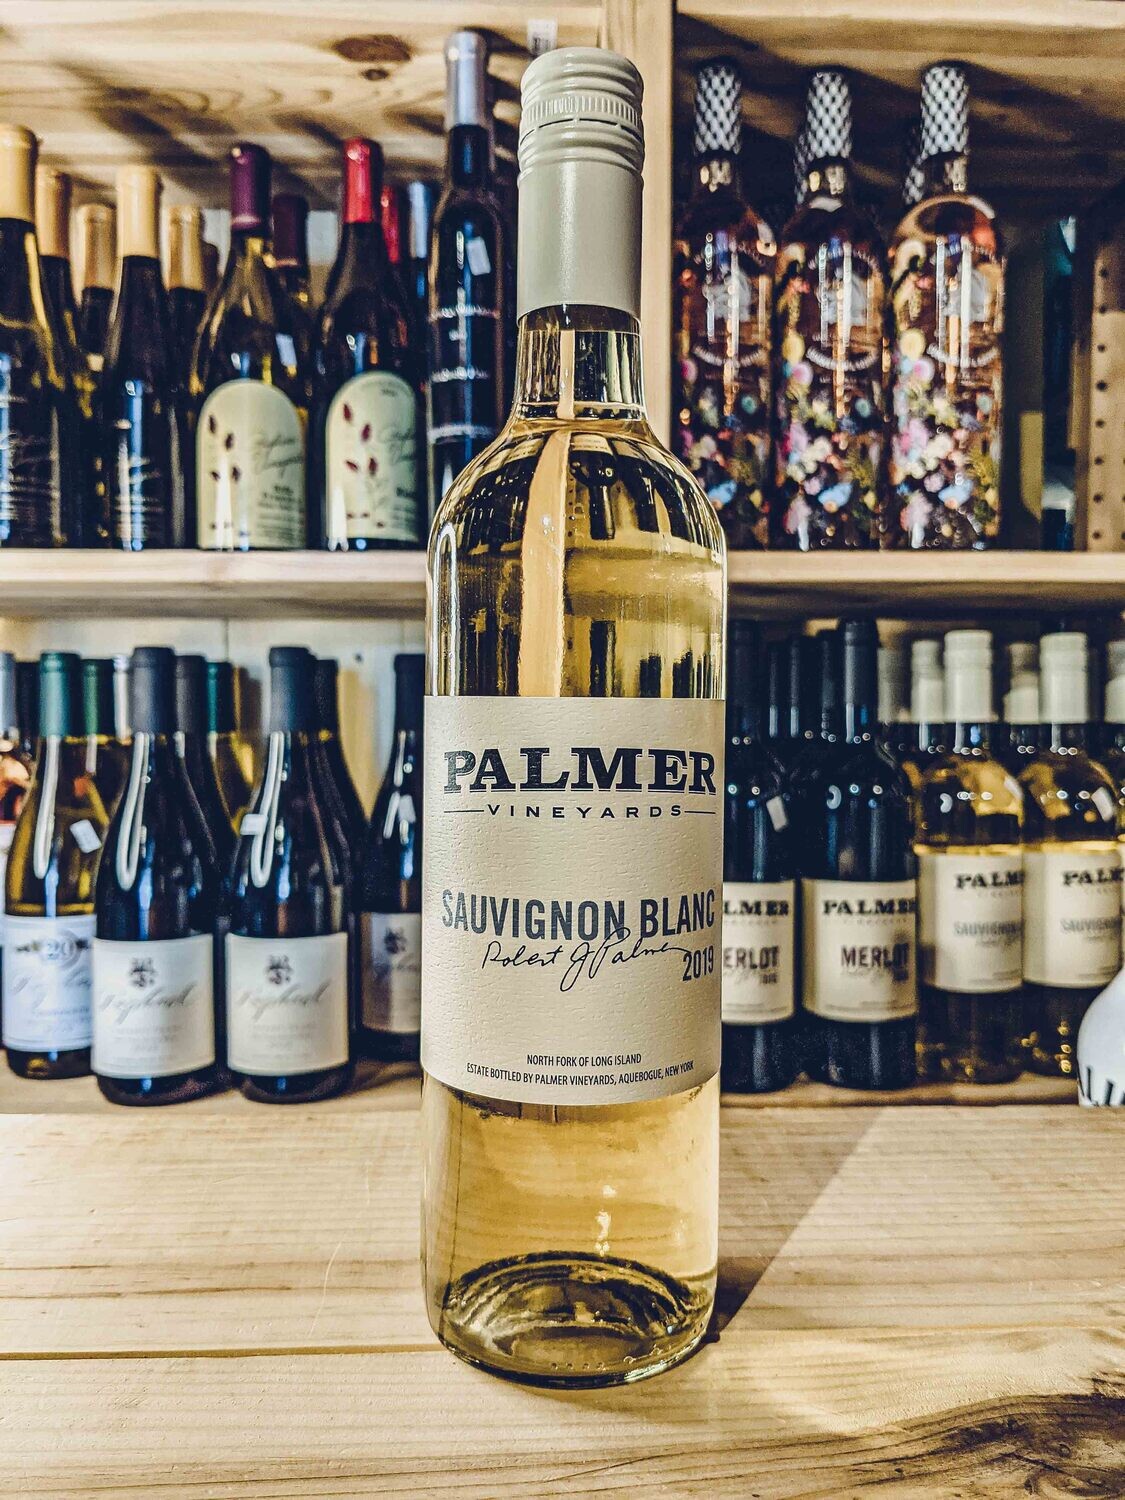 Palmer Vineyards Sauvignon Blanc